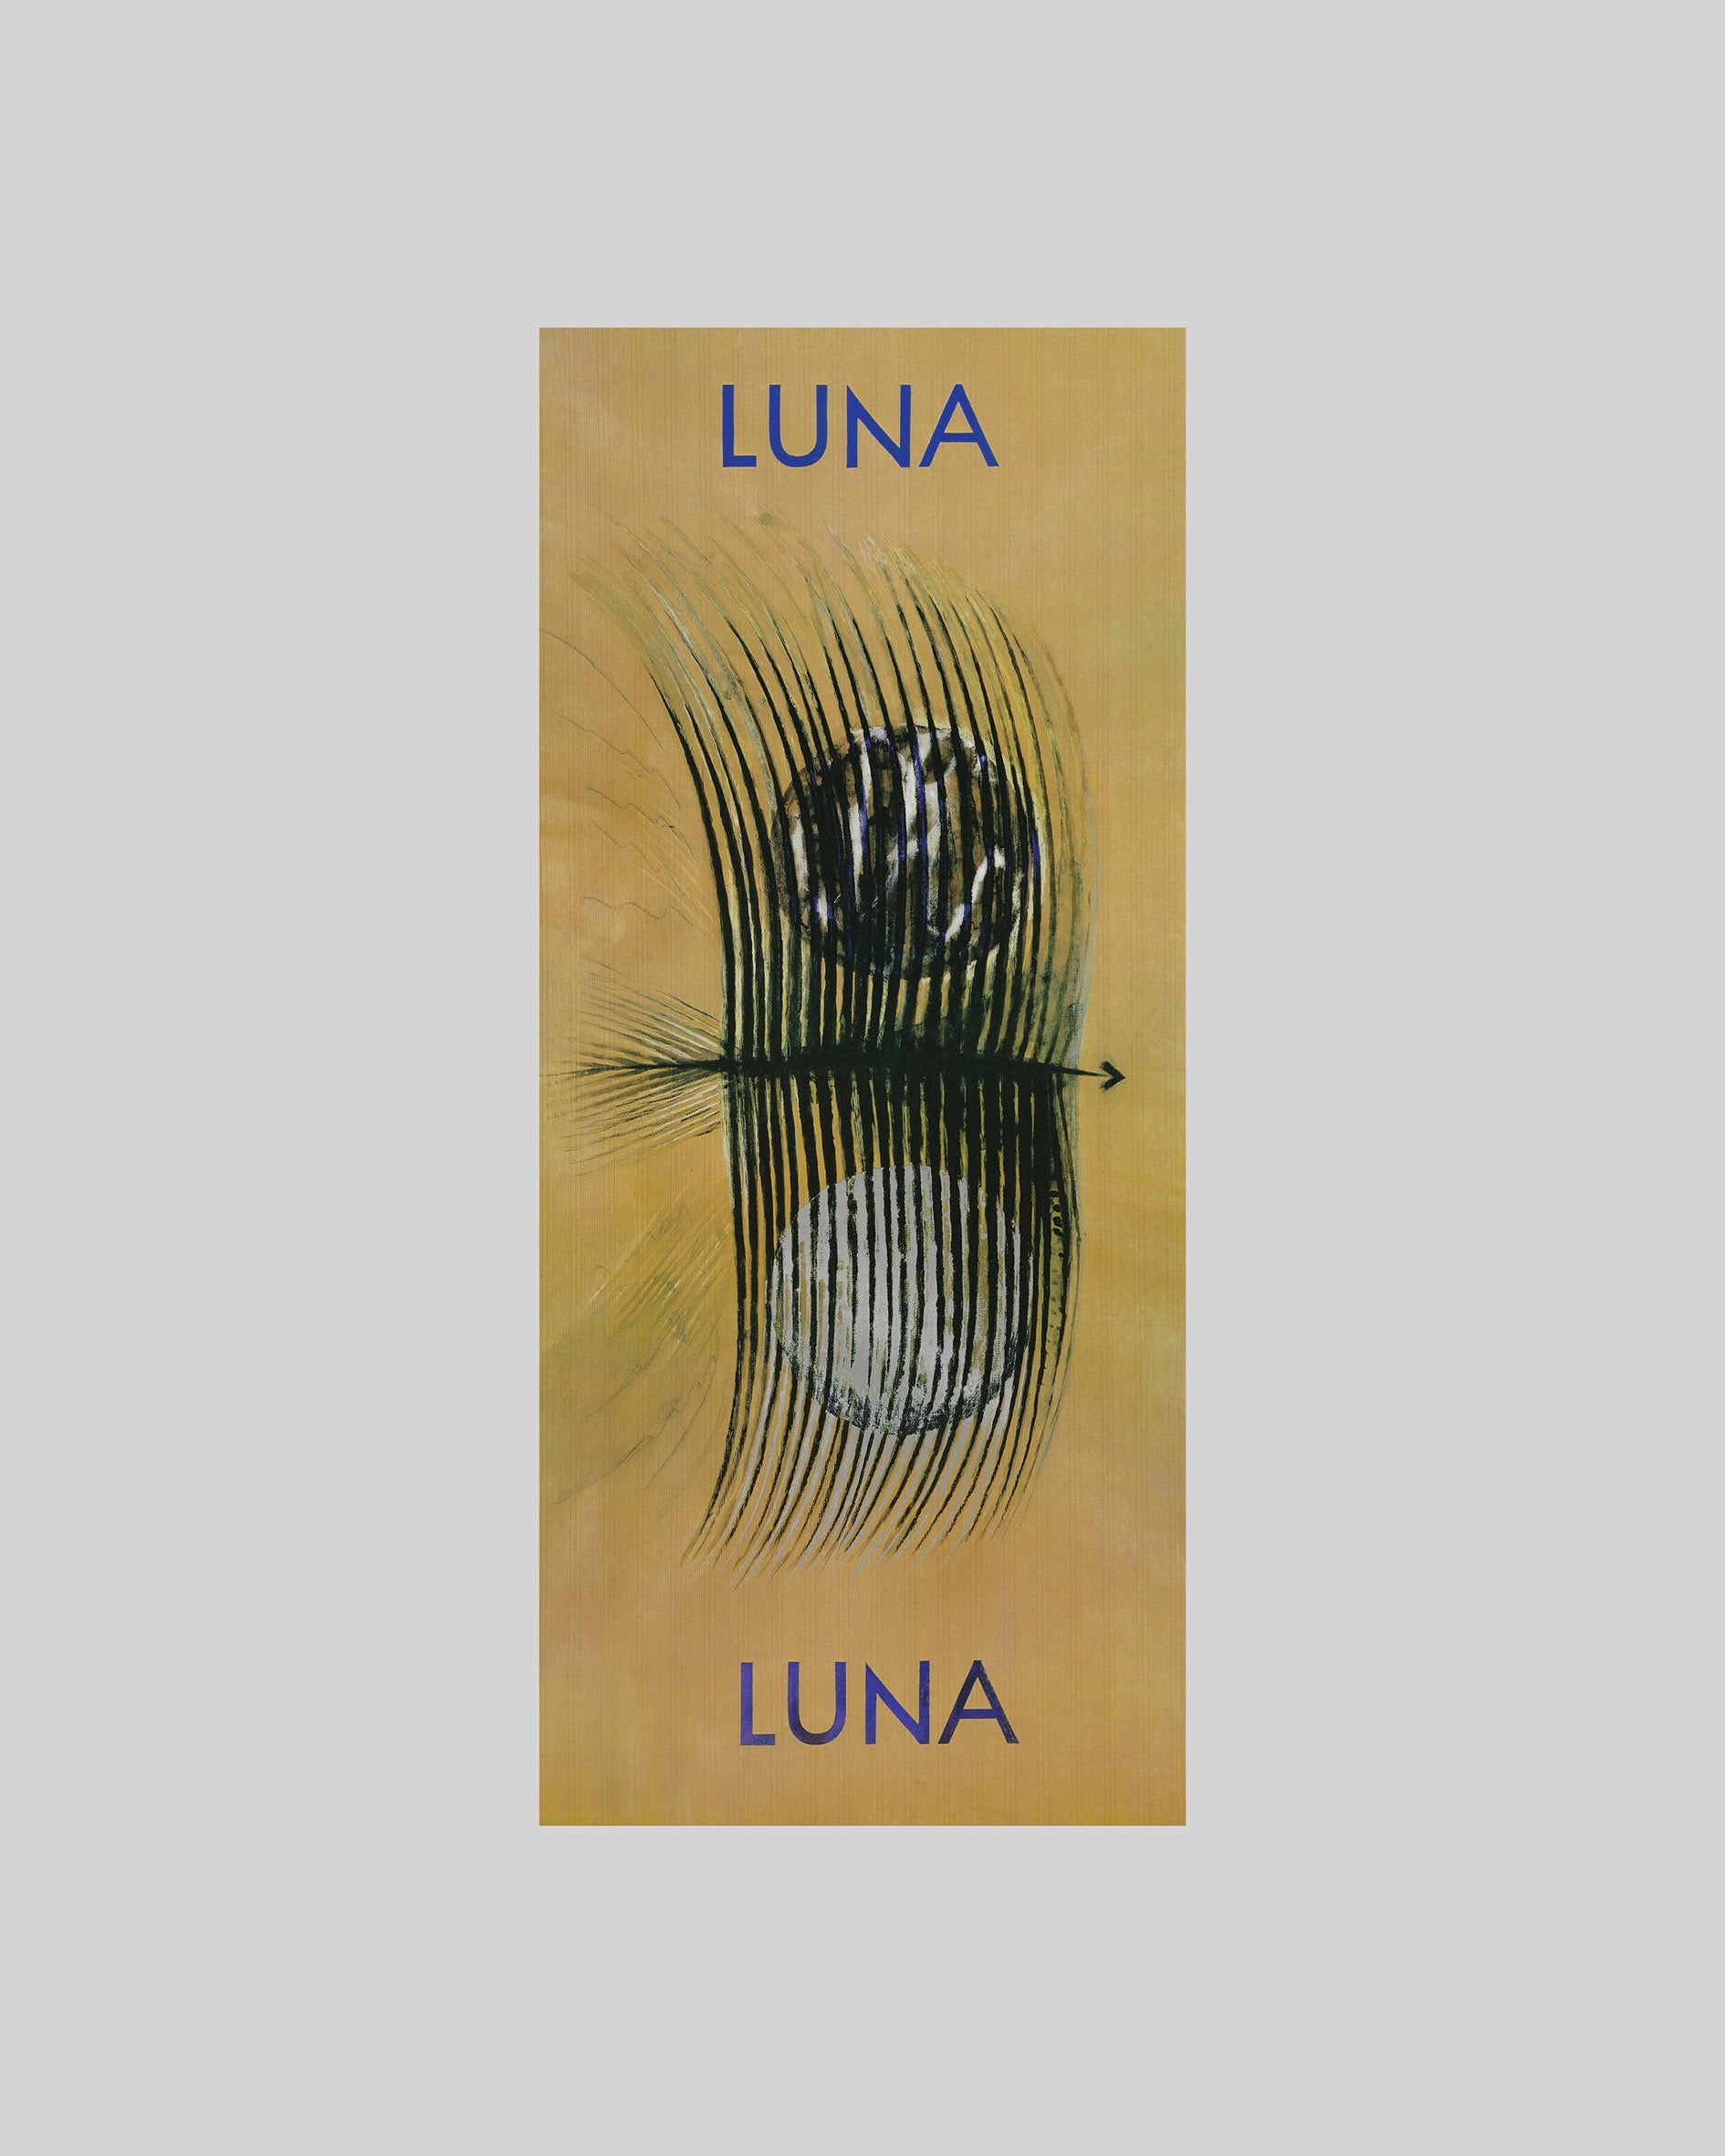 Archival Susanne Schmögner Poster for Luna Luna